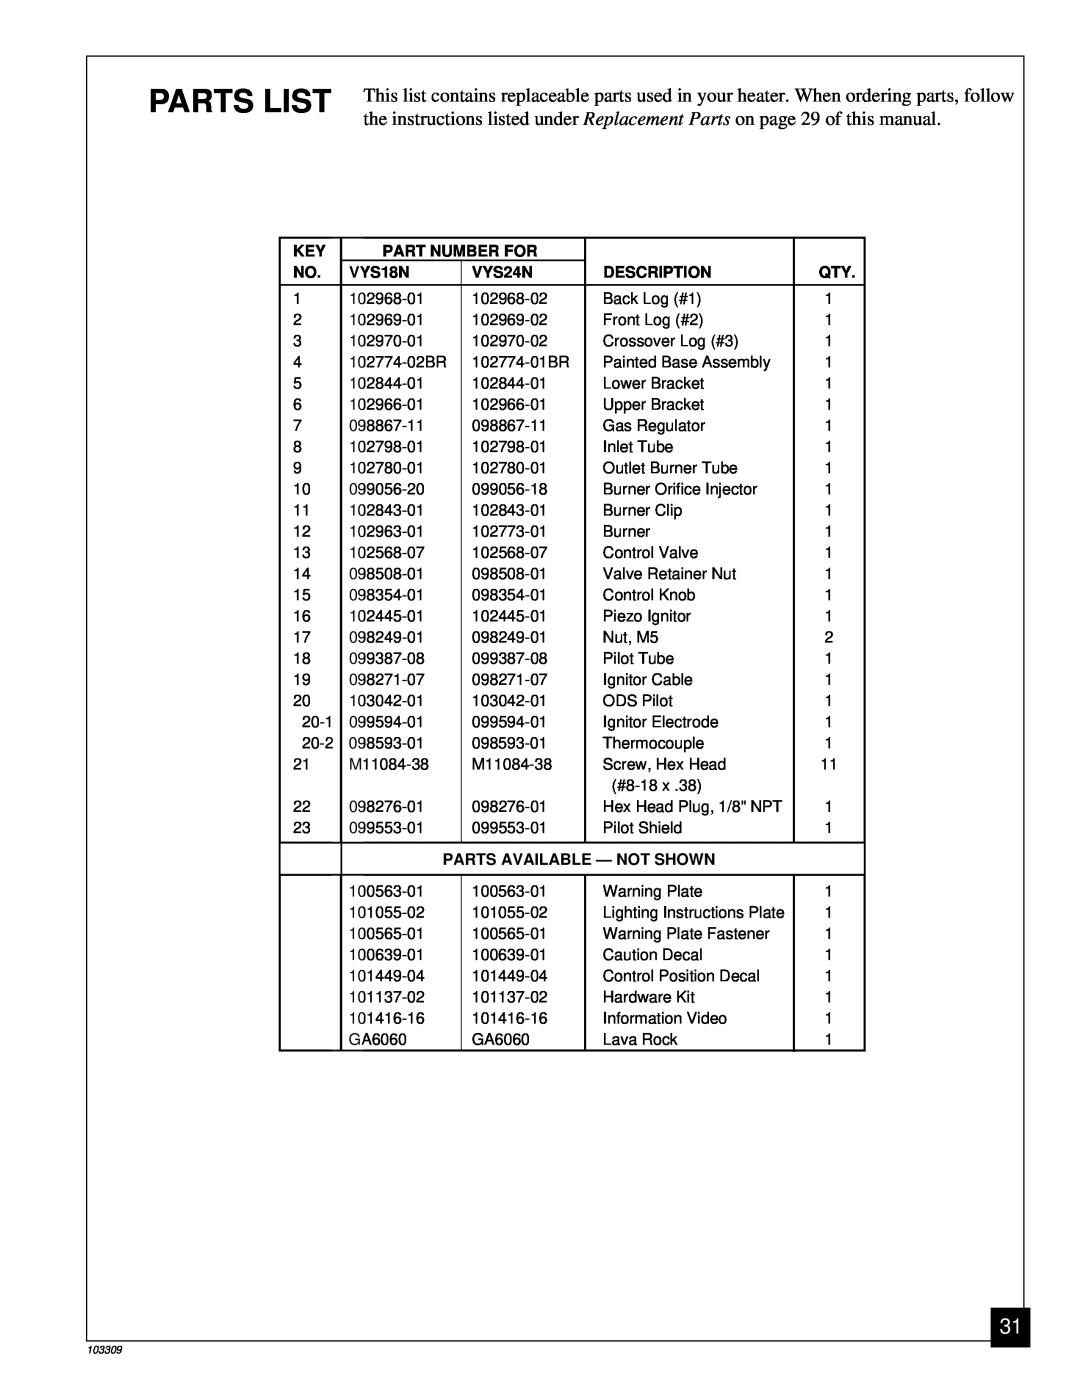 Desa UNVENTED (VENT-FREE) NATURAL GAS LOG HEATER Parts List, Part Number For, VYS18N, VYS24N, Description 